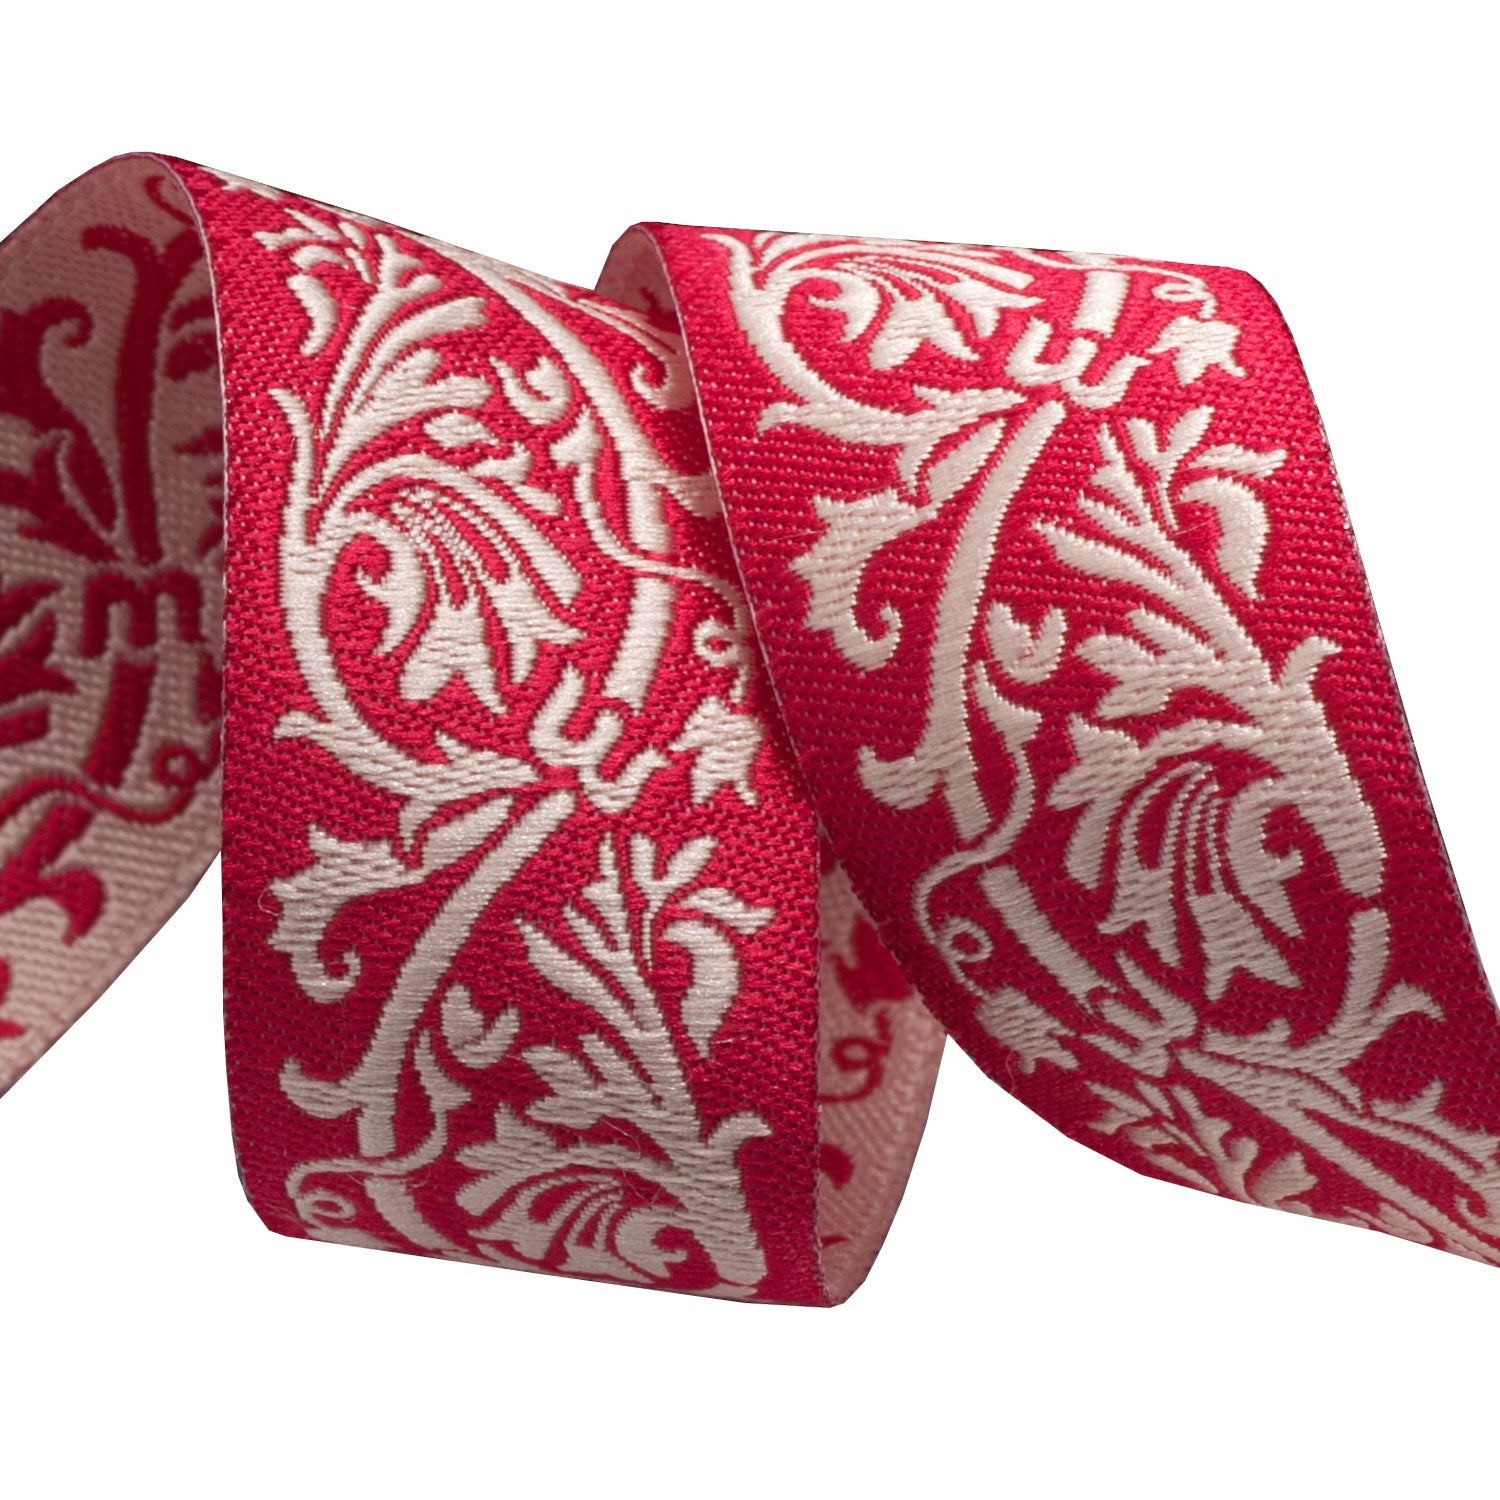 Wholesale French Ribbon - Grosgrain & More - Renaissance Ribbons –  Renaissance Ribbons